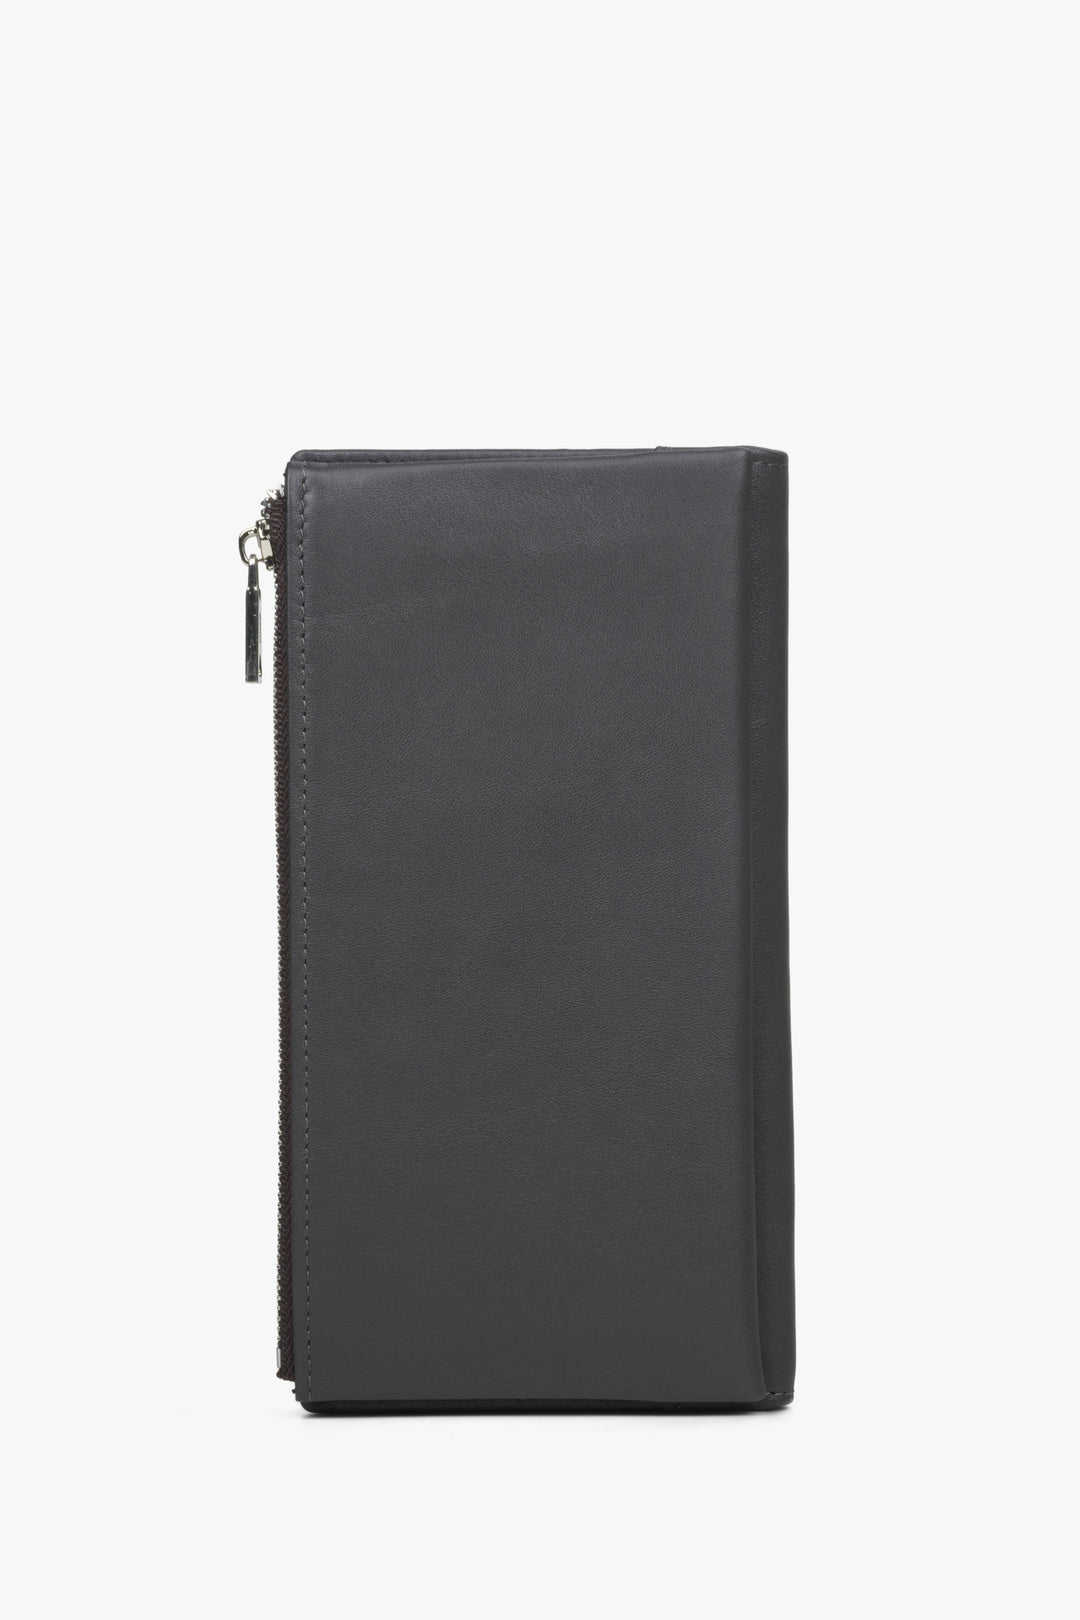 Capacious men's black Estro  wallet made of genuine leather.